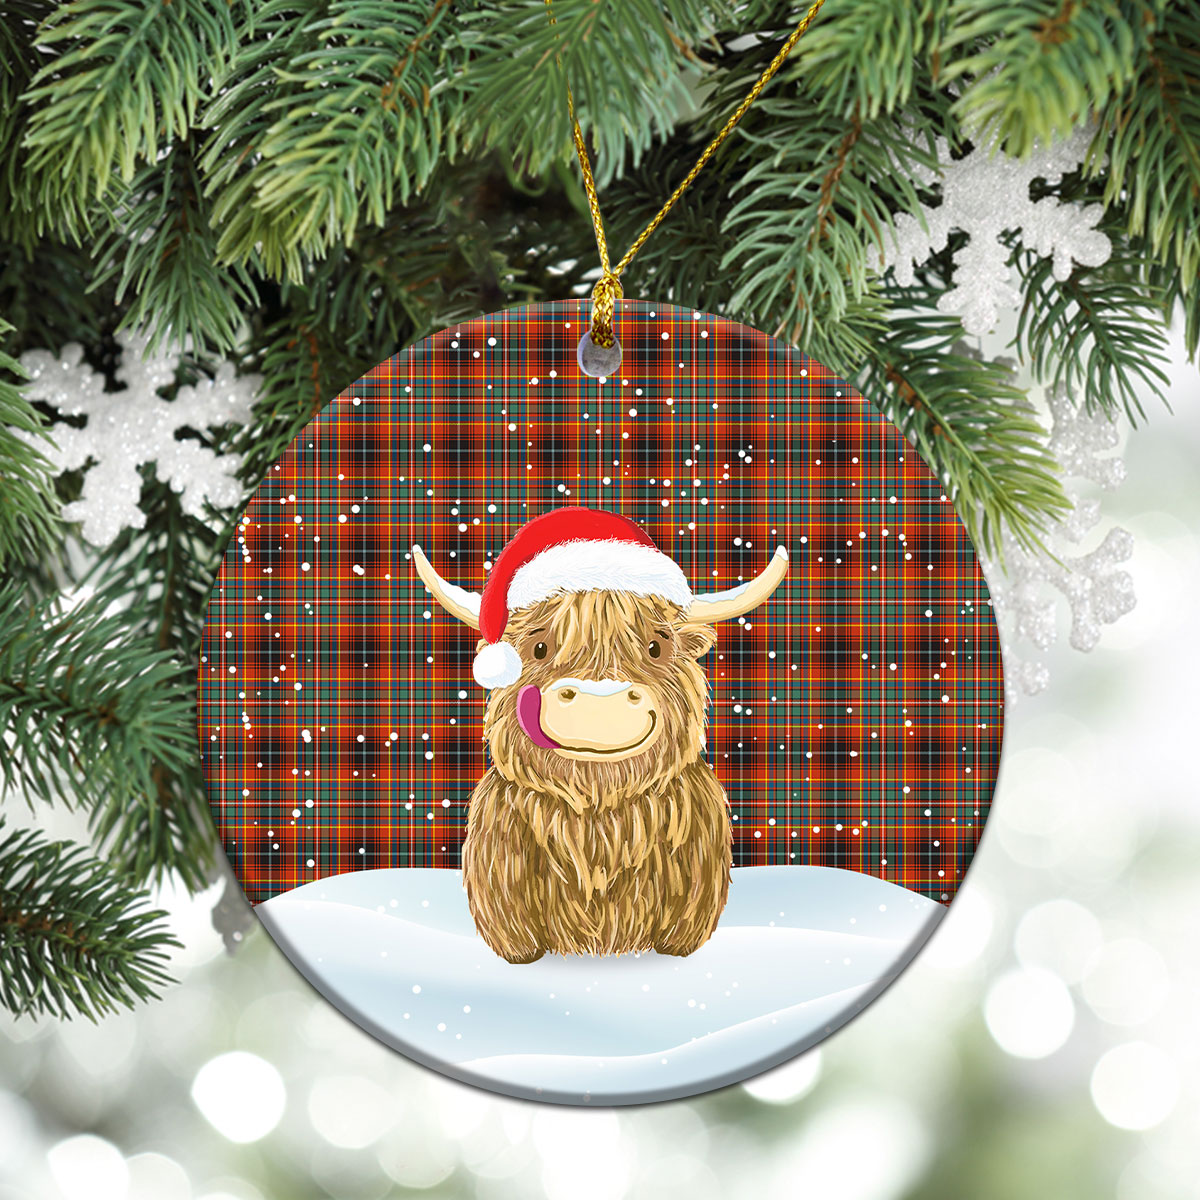 Innes Ancient Tartan Christmas Ceramic Ornament - Highland Cows Style